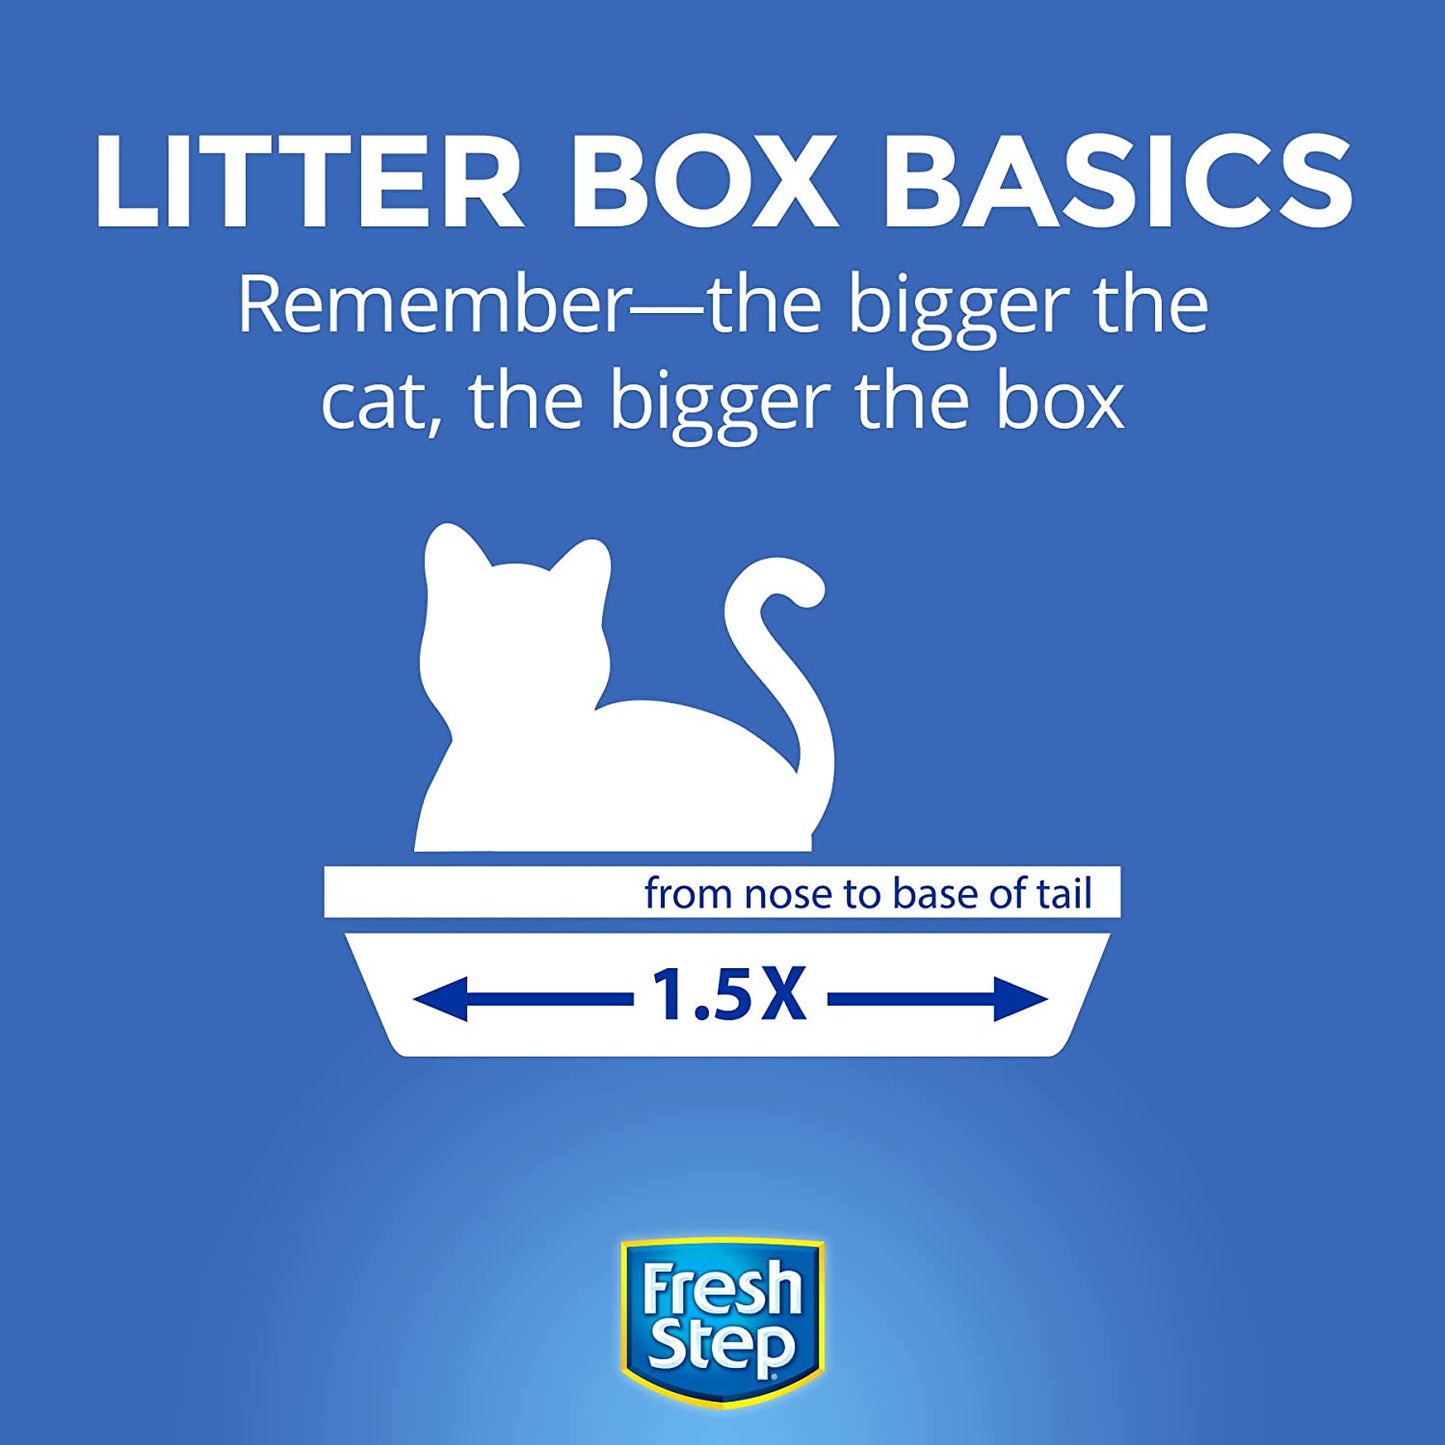 Fresh Step Clumping Cat Litter, Multi-Cat Odor Control, 14 lbs